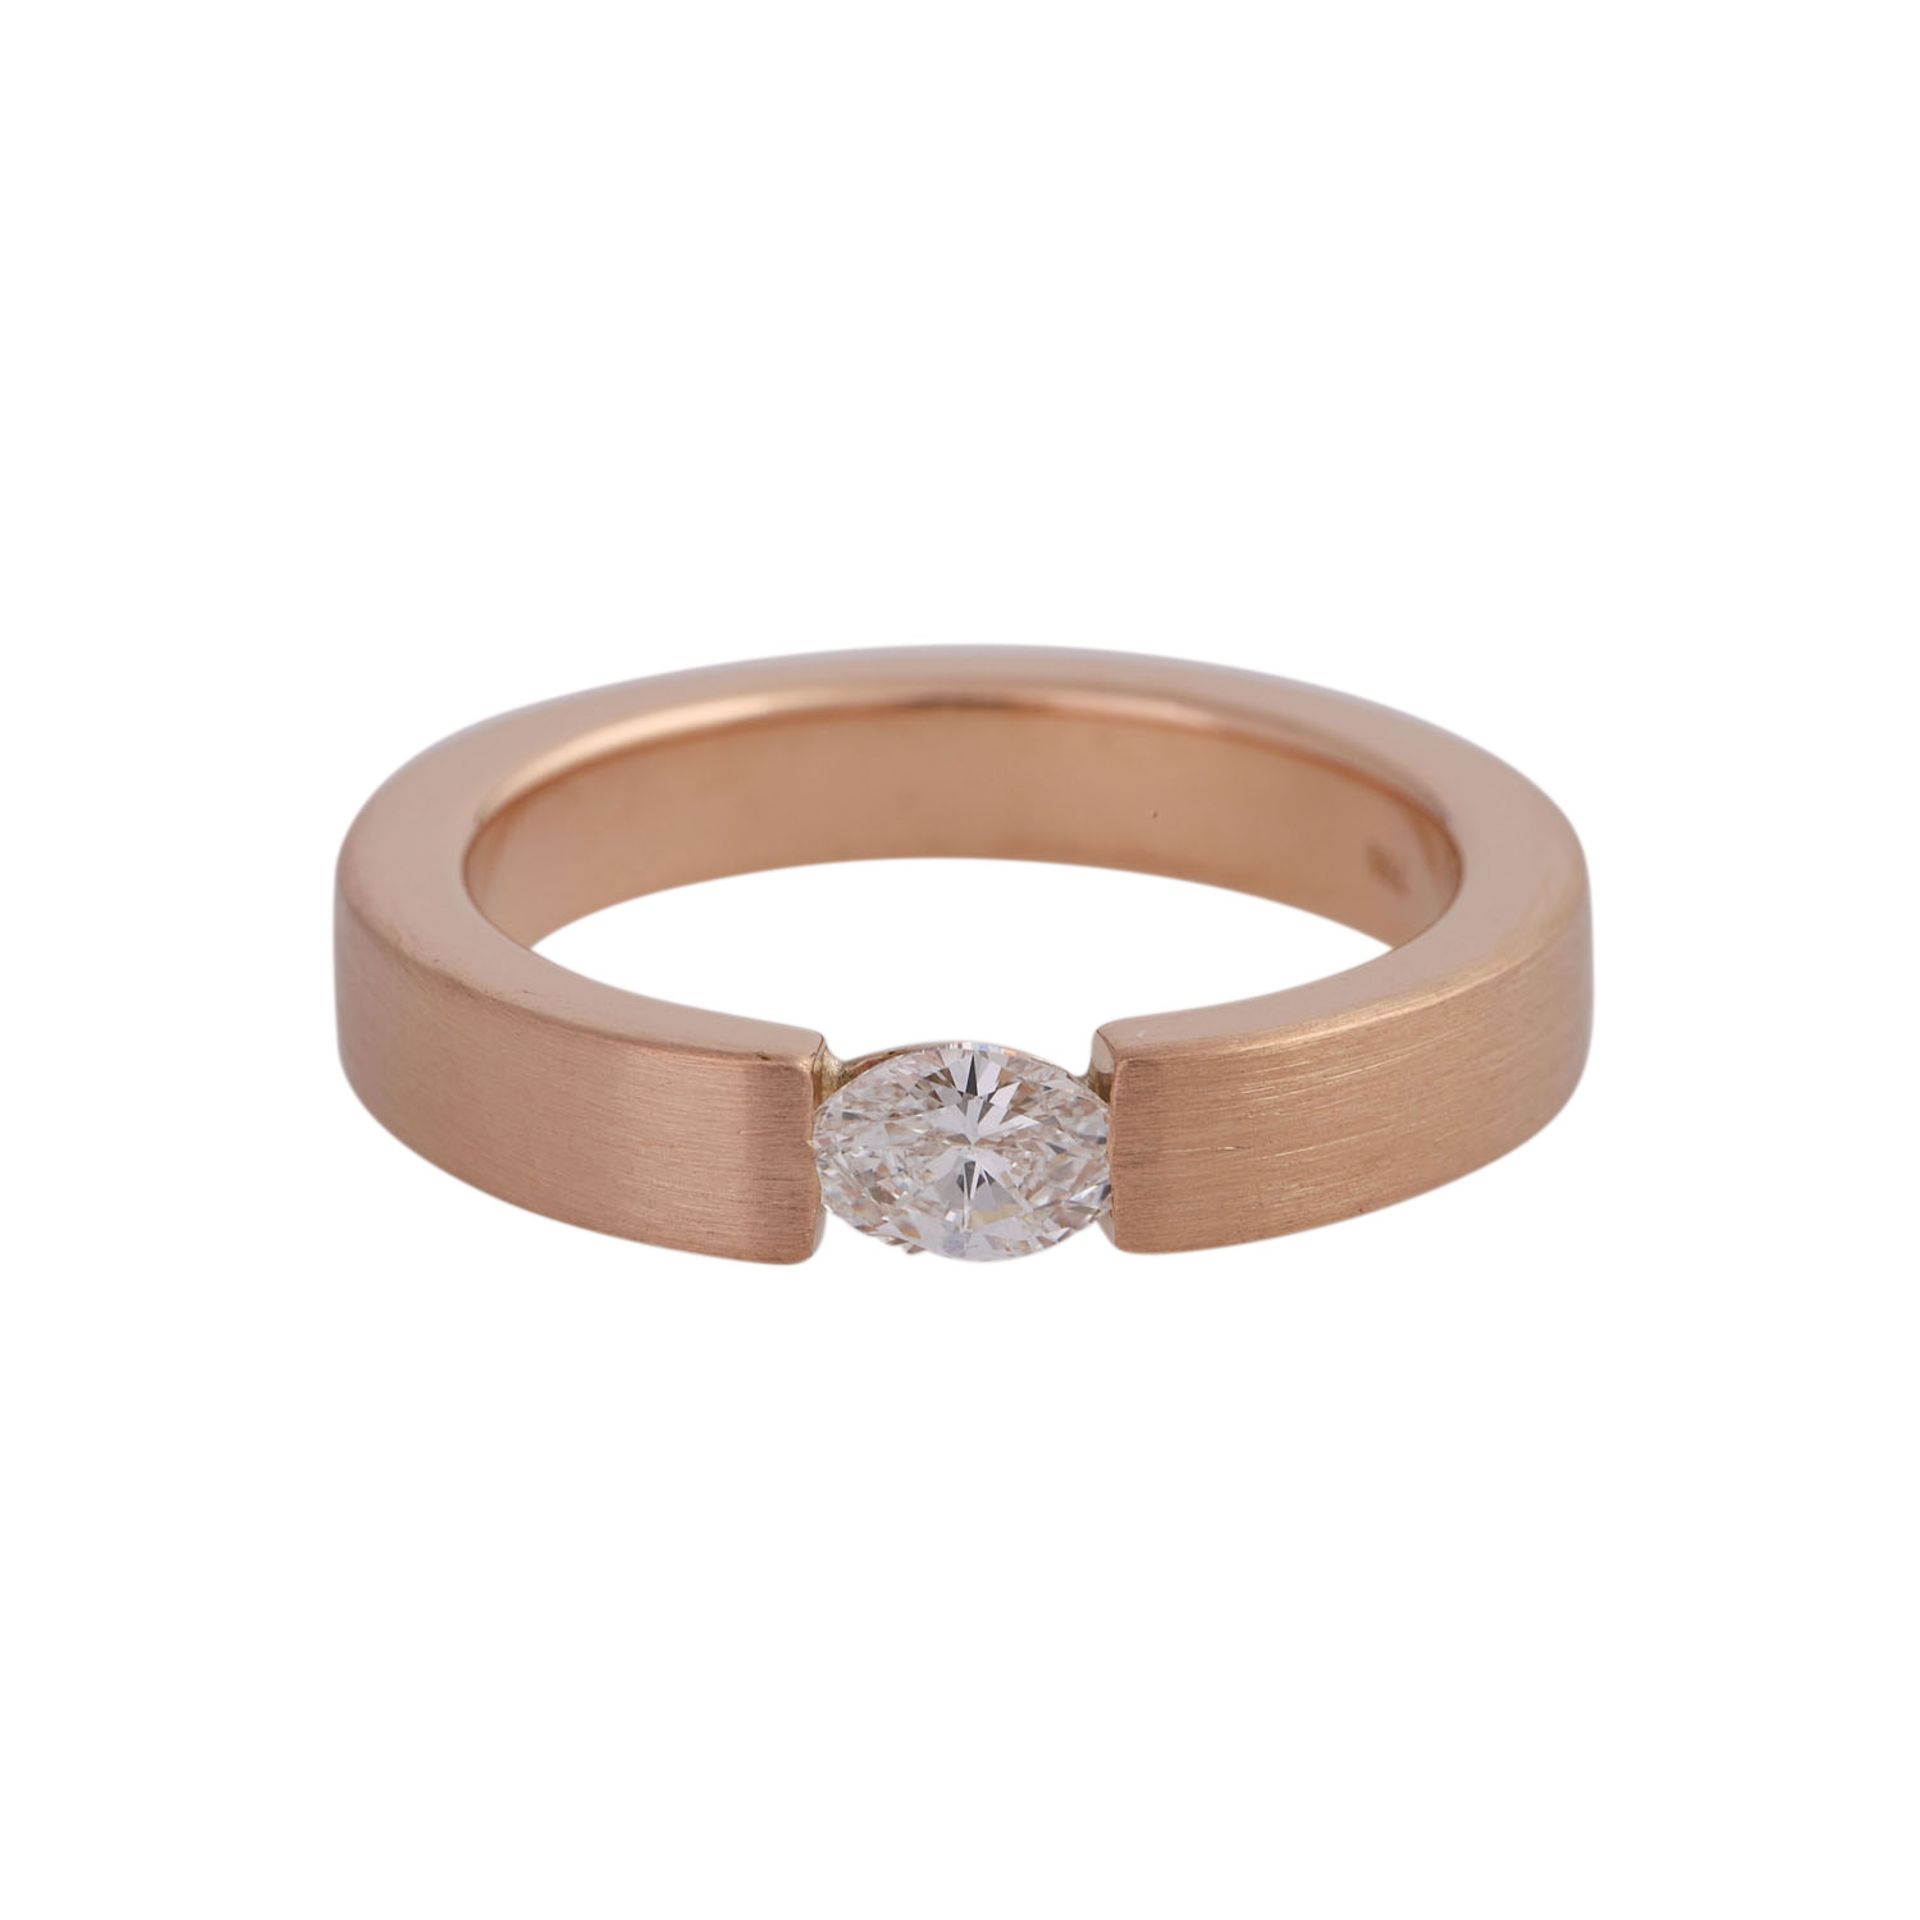 Ring mit Navette-Diamant ca. 0,25 ct,LGW (I-J)/VS, RsG 18K, RW: 53, Fassung unterseitig mit